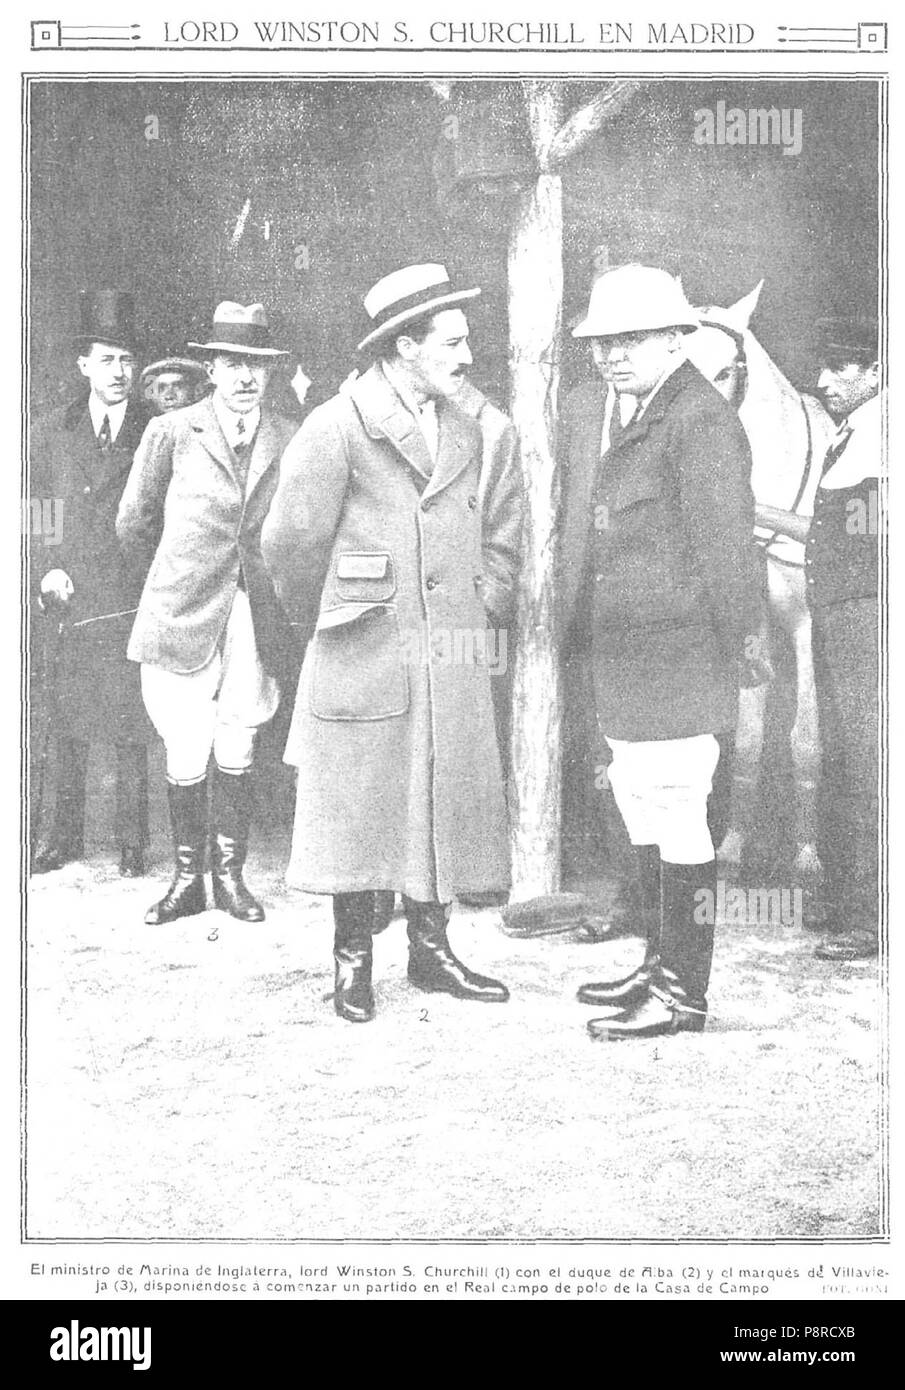 404 Lord Winston S. Churchill en Madrid, de Goñi, Nuevo Mundo, 16 de abril de 1914 Stock Photo